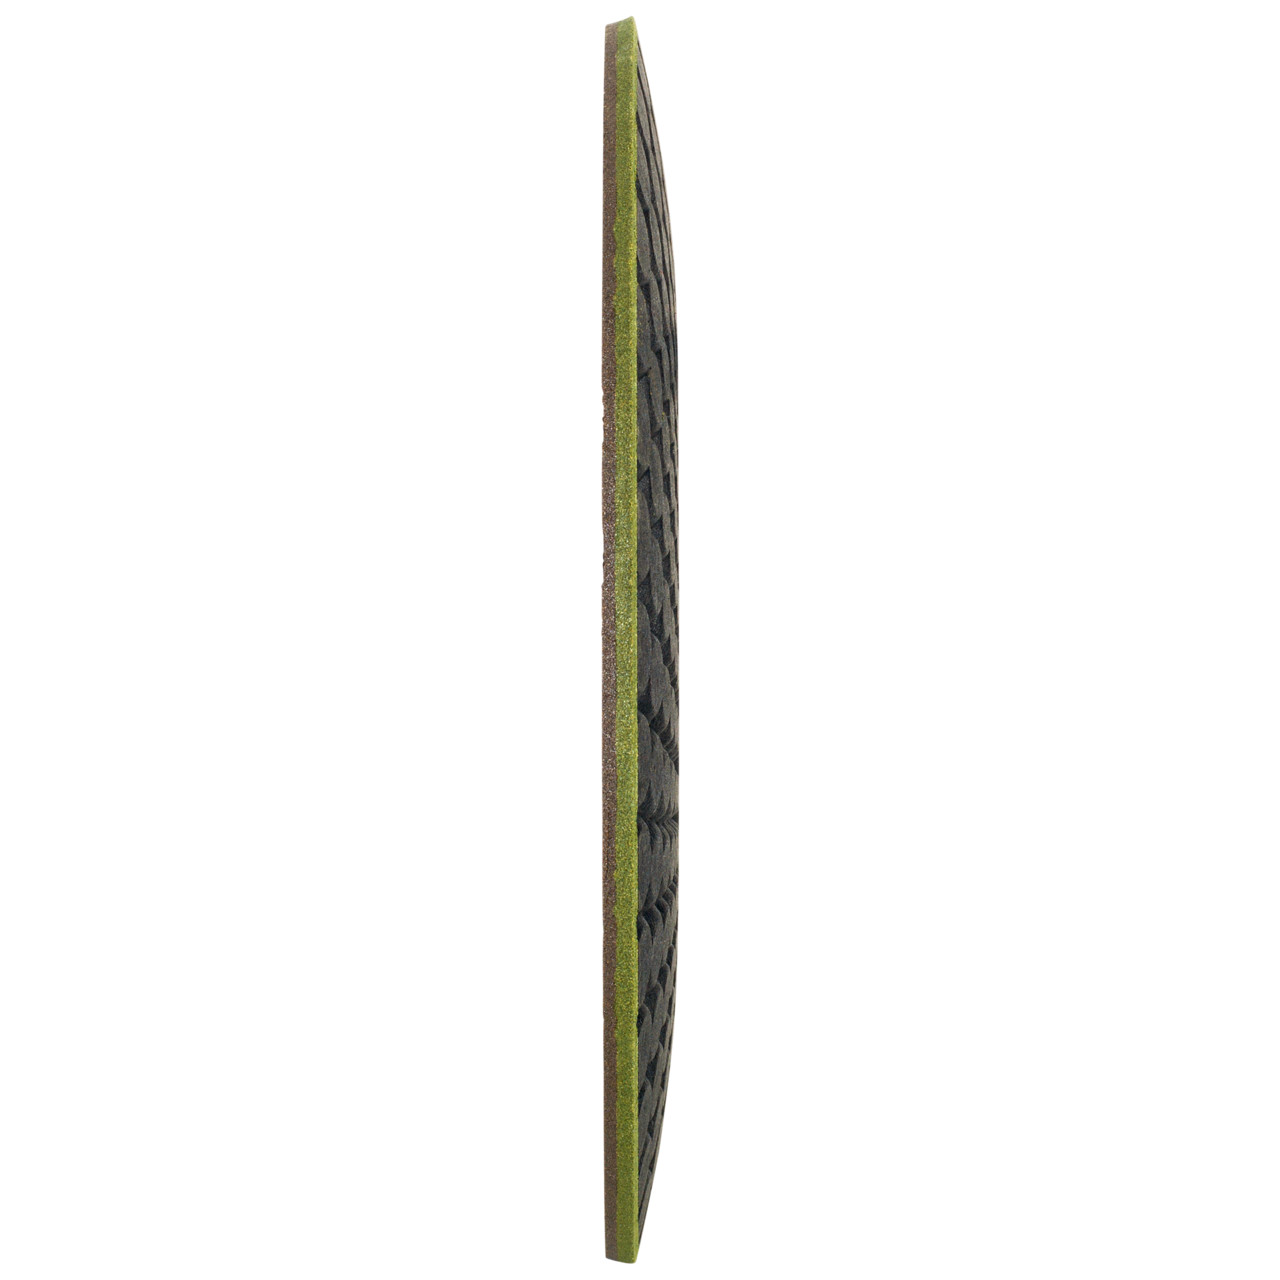 Tyrolit RONDELLER DxH 115x22,23 Para piedra, forma: 29RON (Rondeller®), Art. 908233